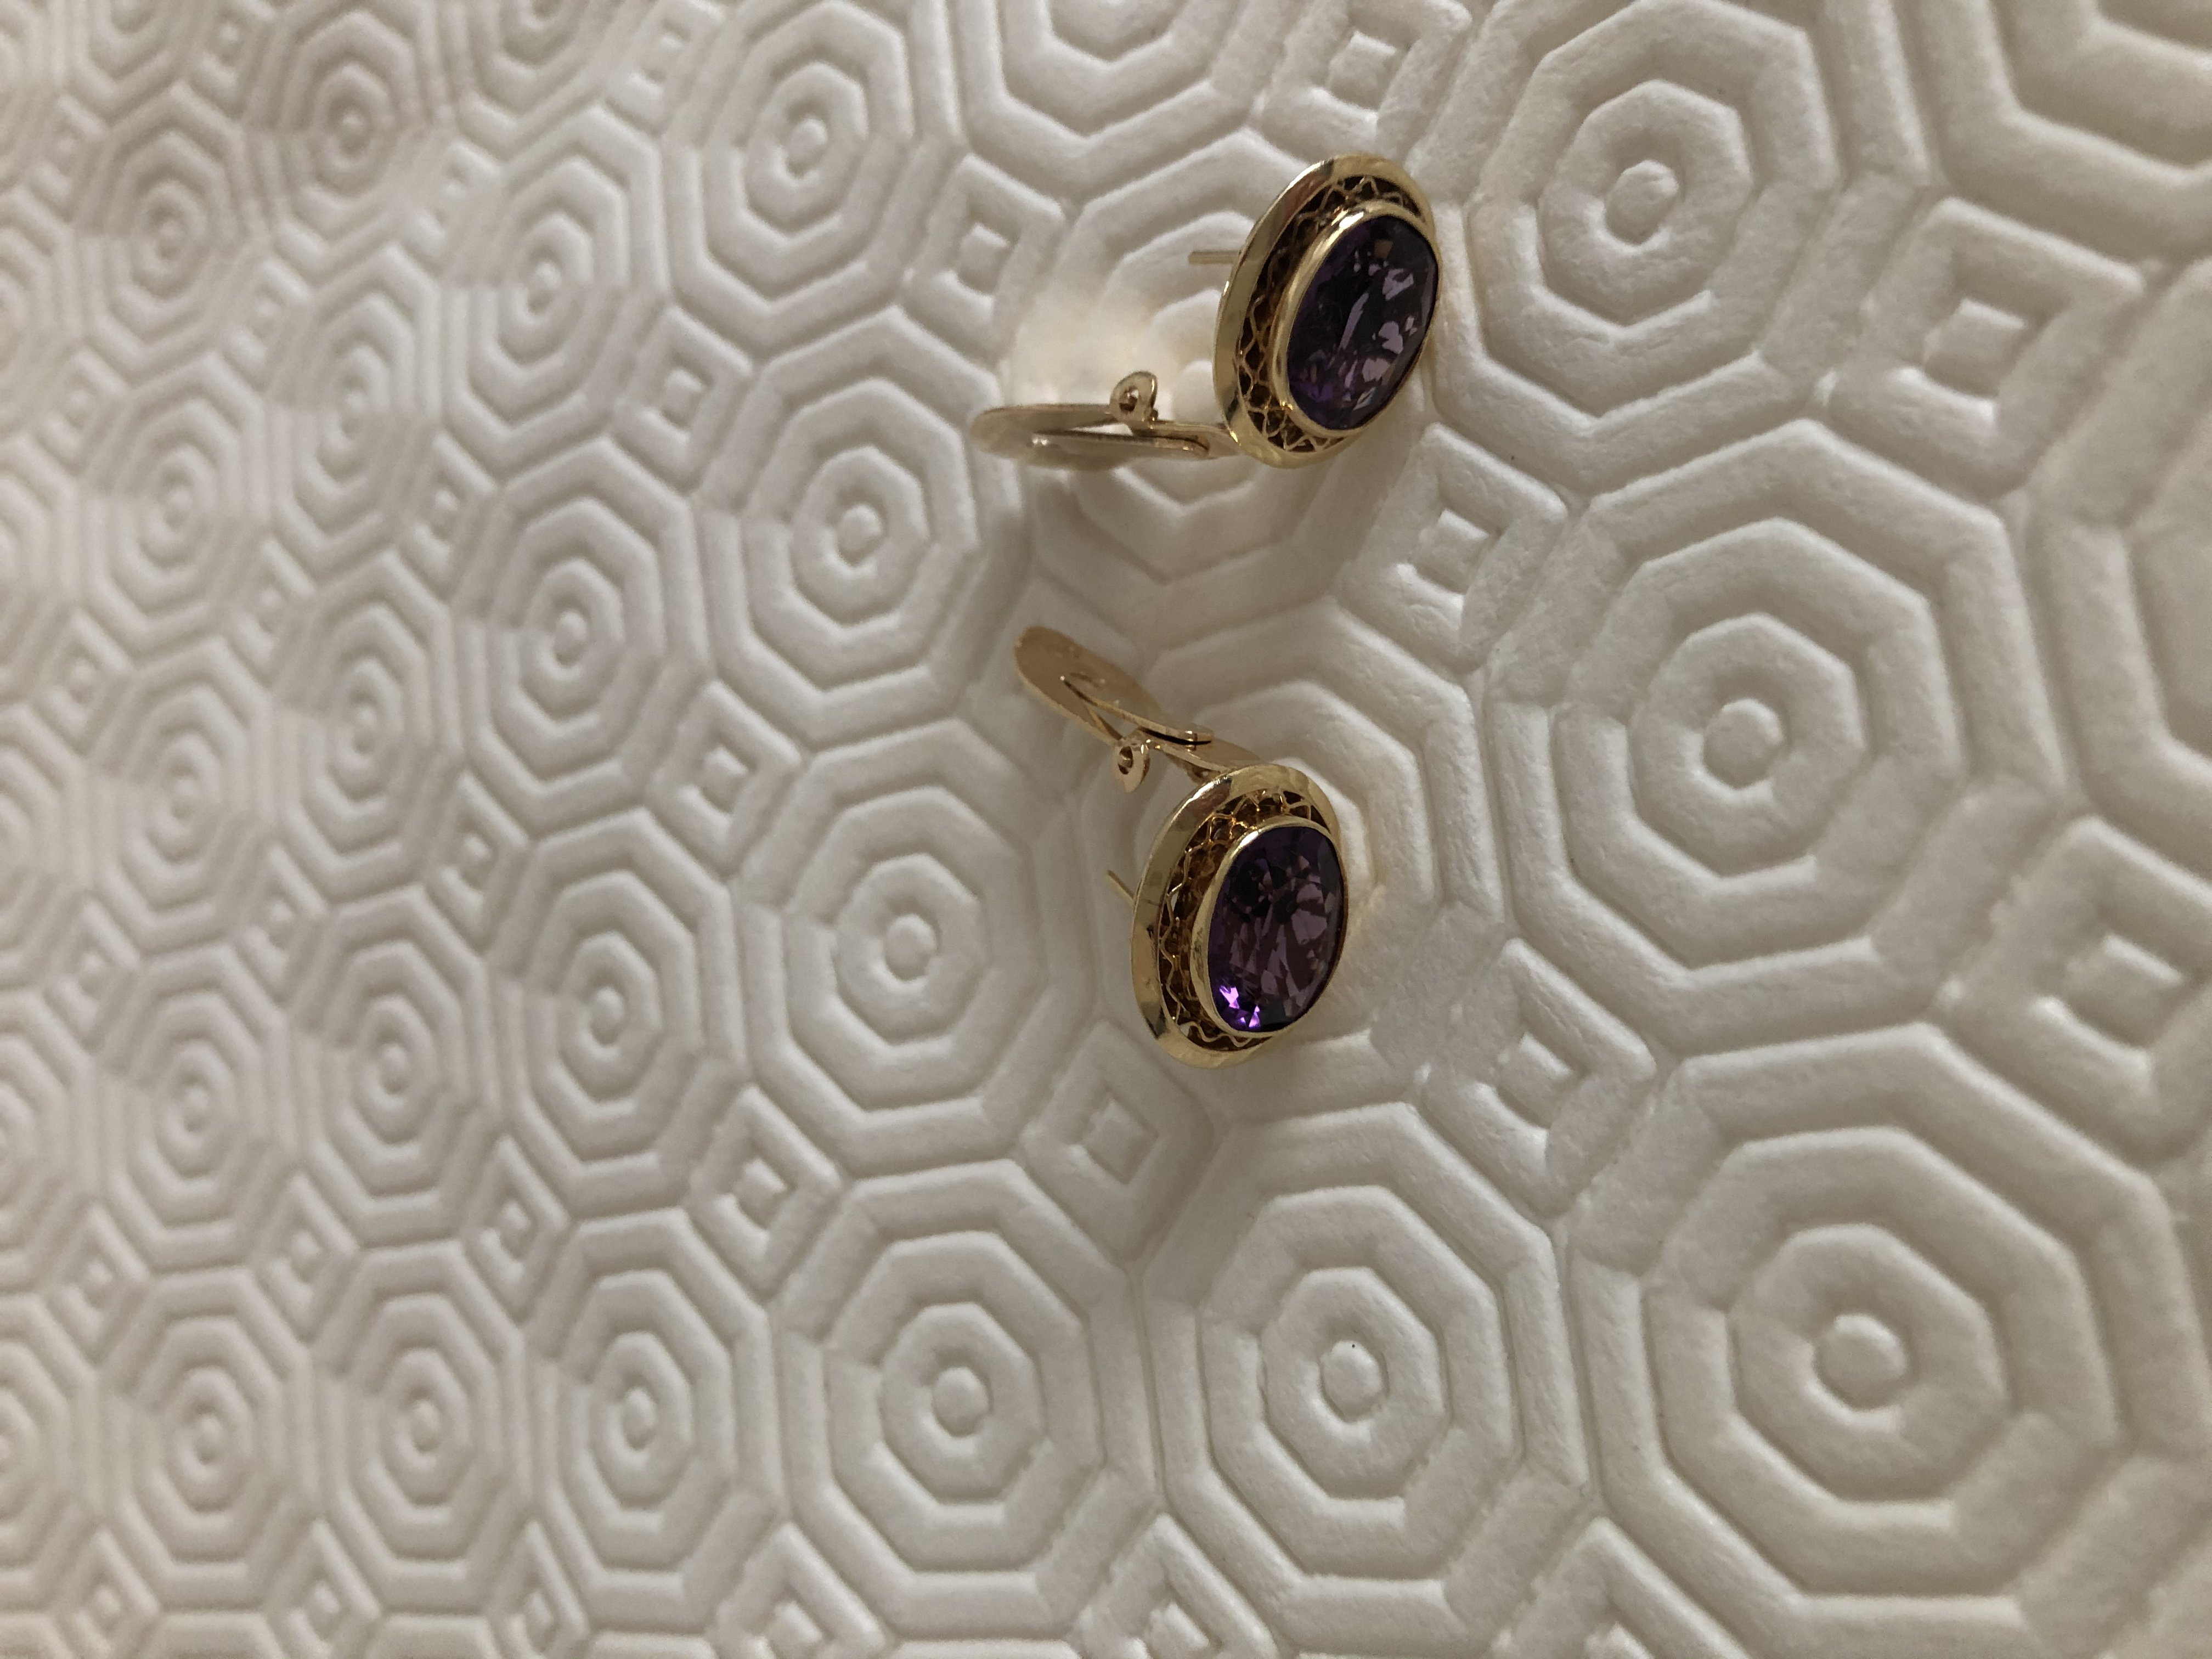 Pair of earrings 18 karat gold with amethyst stones - Image 5 of 5